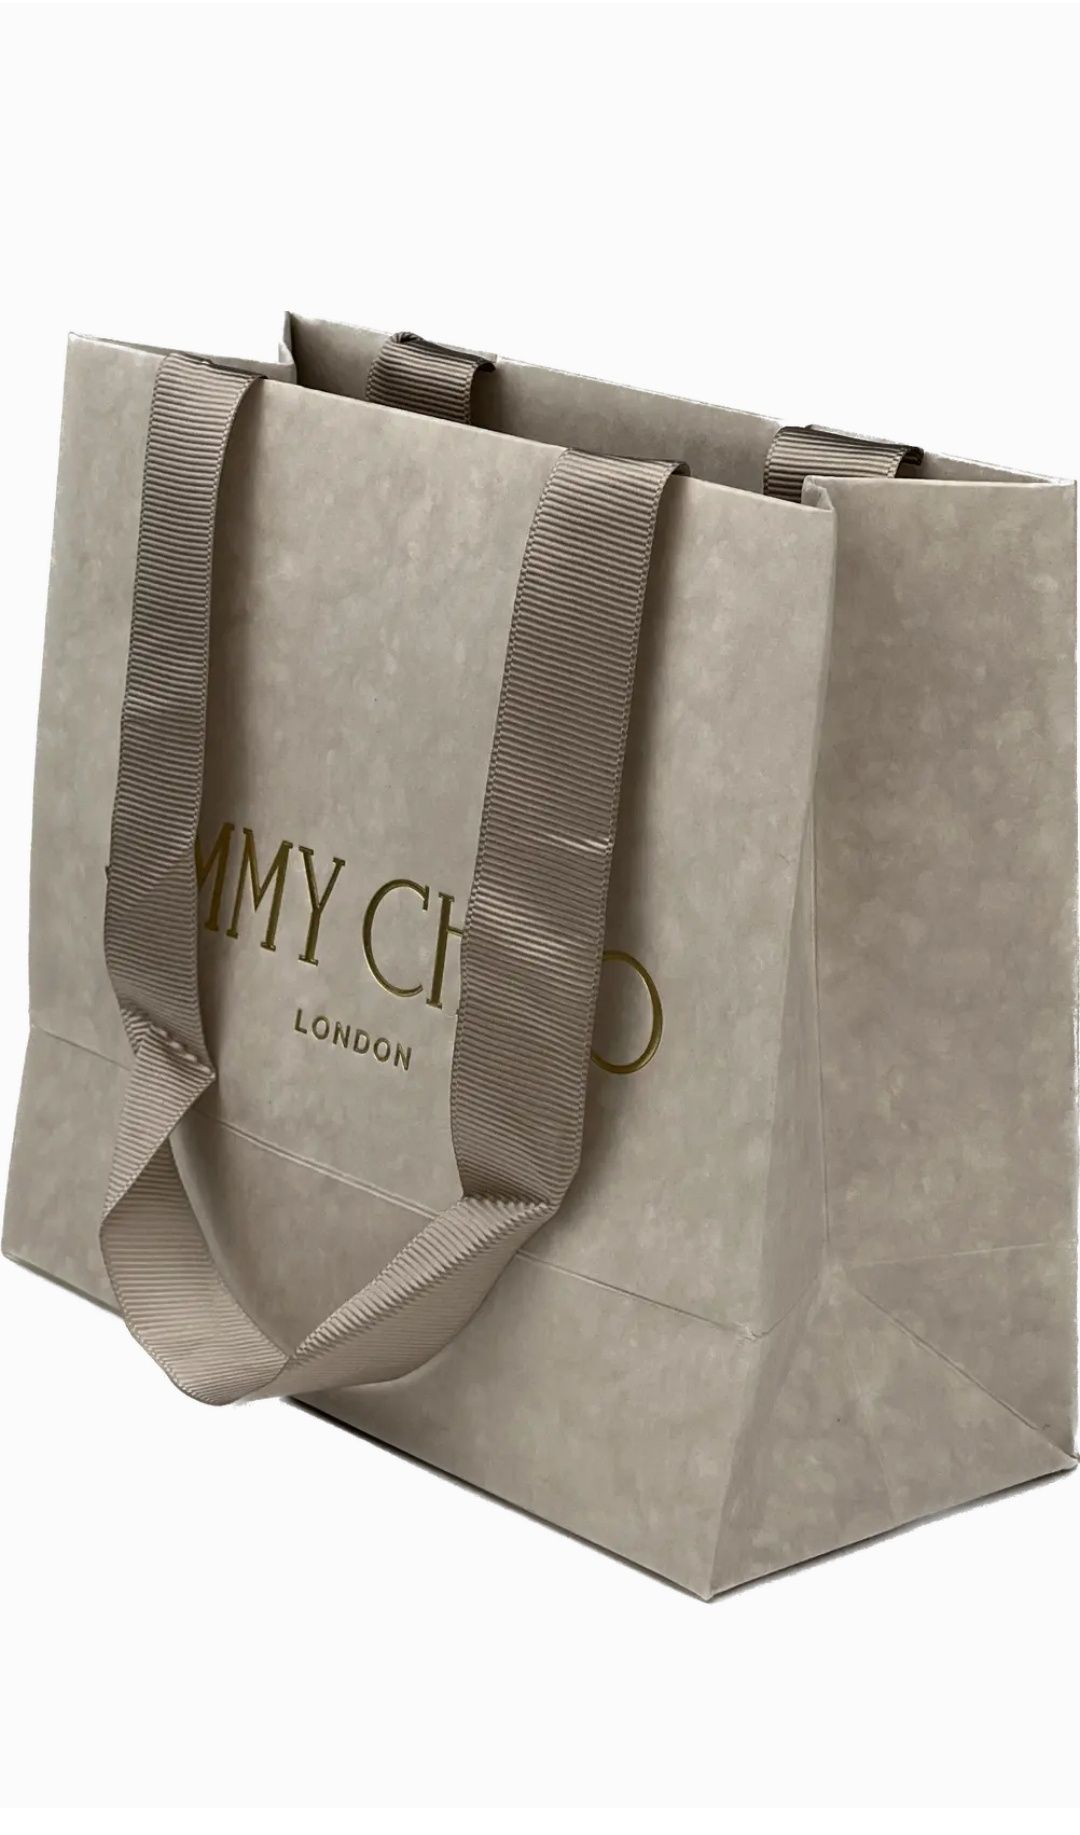 New Jimmy Choo London Matte Light Gray Paper Gift Shopping Bags